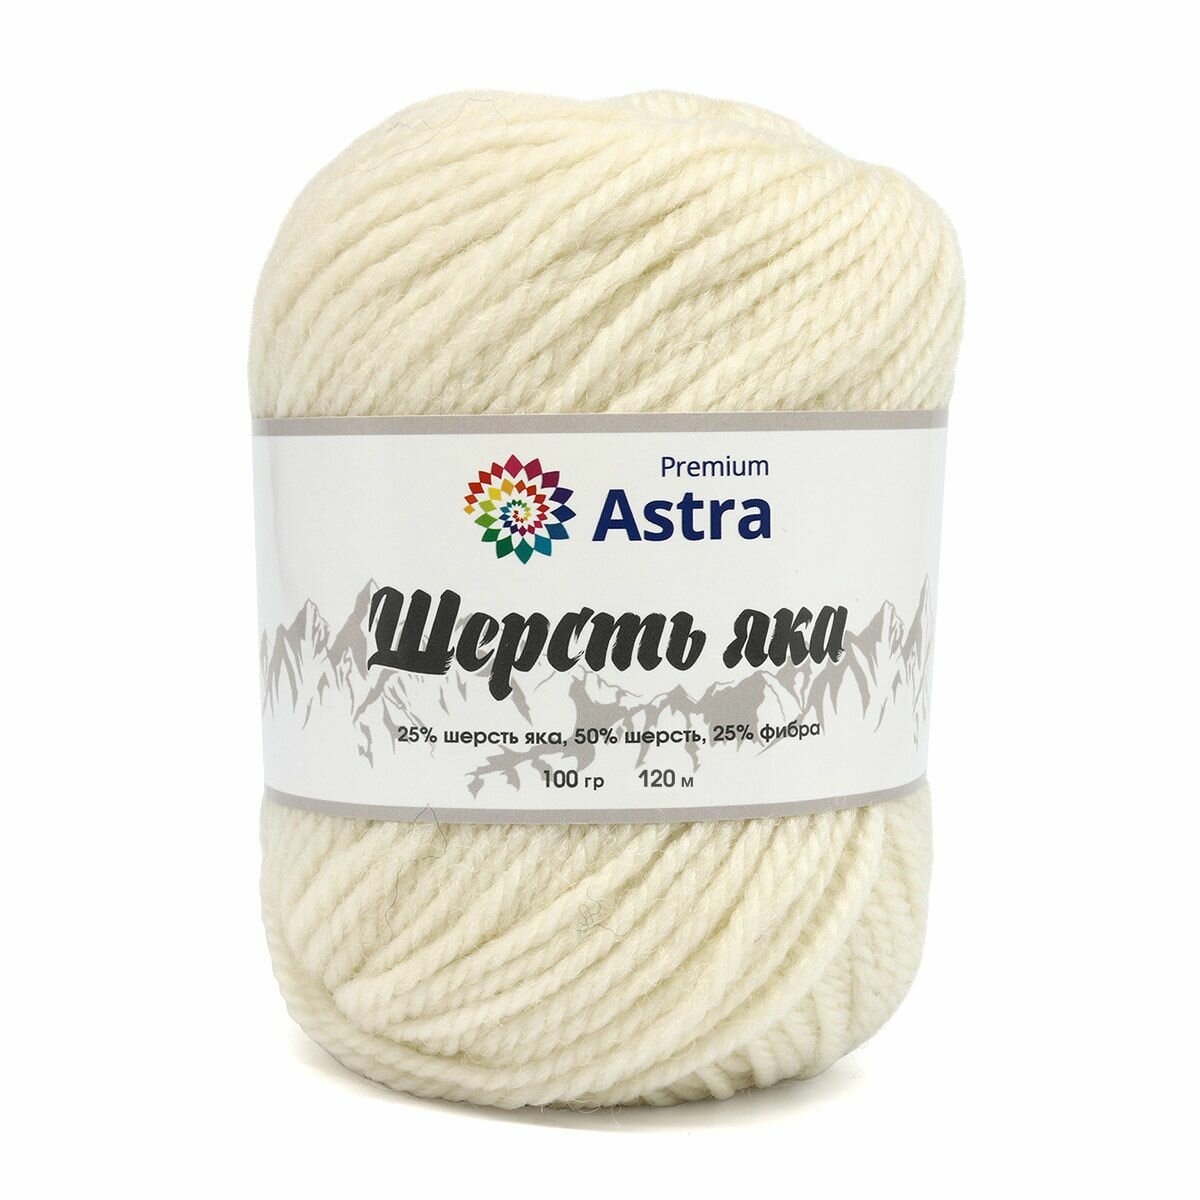 Пряжа для вязания Astra Premium 'Шерсть яка' (Yak wool) 100гр 120м (+/-5%) (25% шерсть яка, 50% шерсть, 25% фибра) (01 белый), 2 мотка